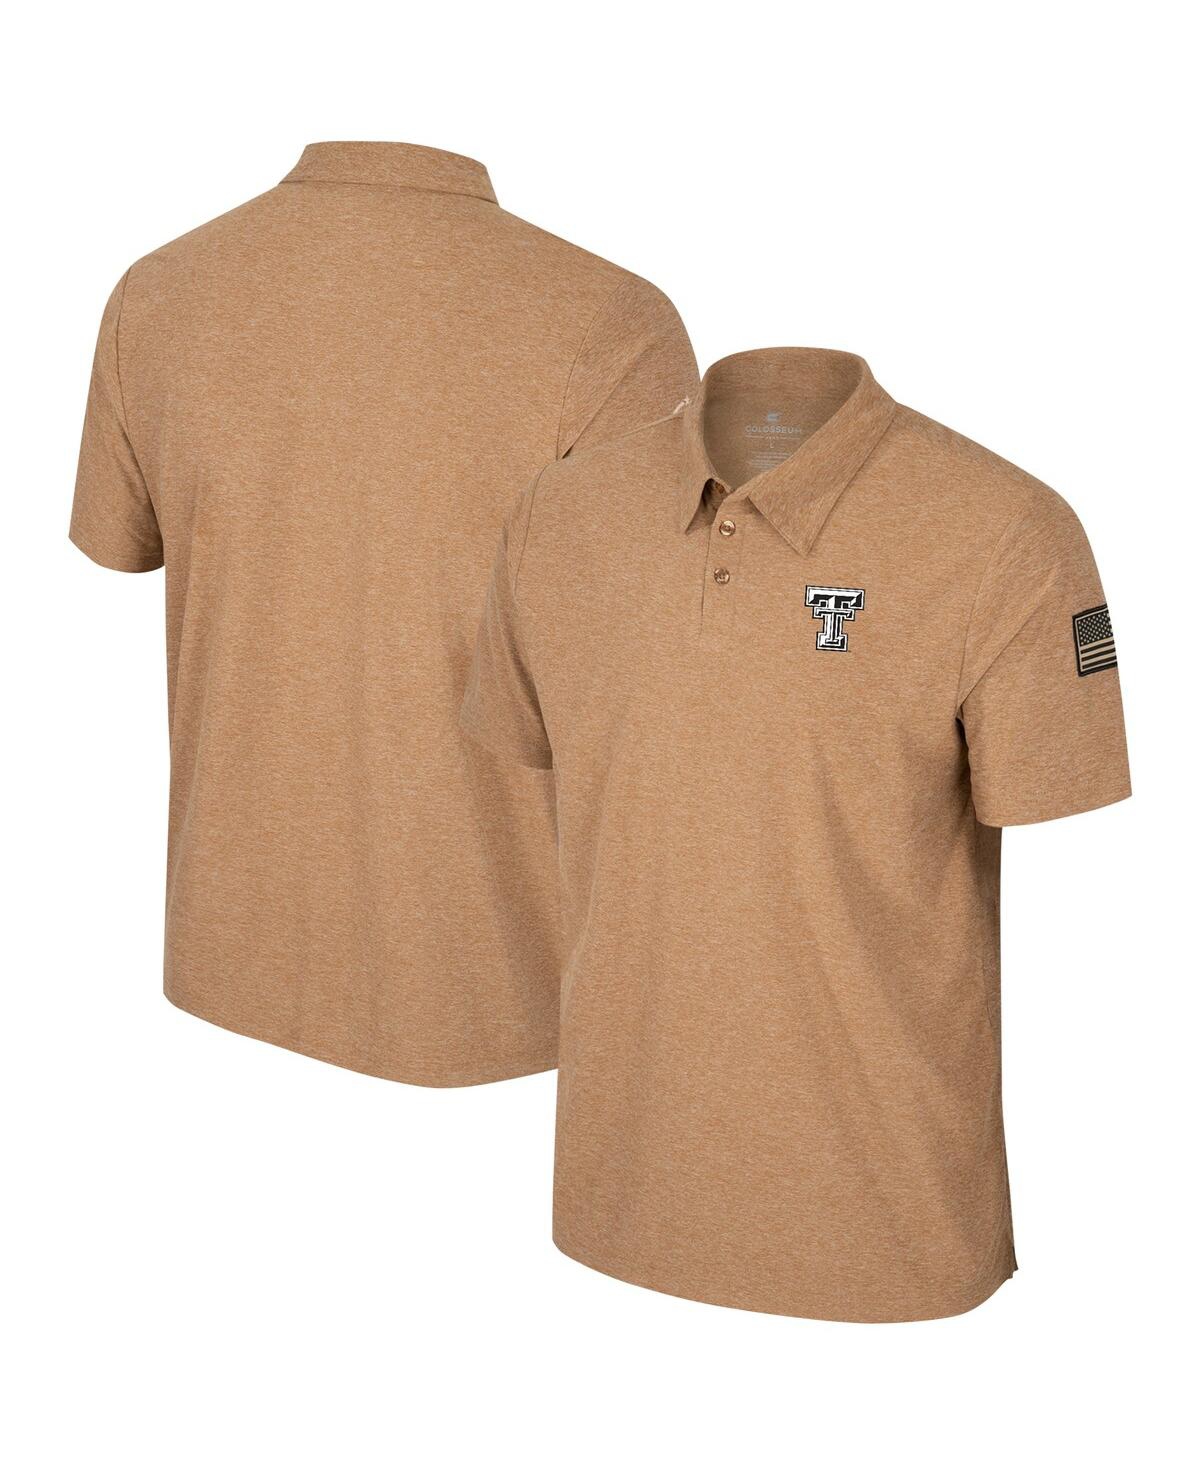 Men's Colosseum Khaki Texas Tech Red Raiders Oht Military-Inspired Appreciation Cloud Jersey Desert Polo Shirt - Khaki